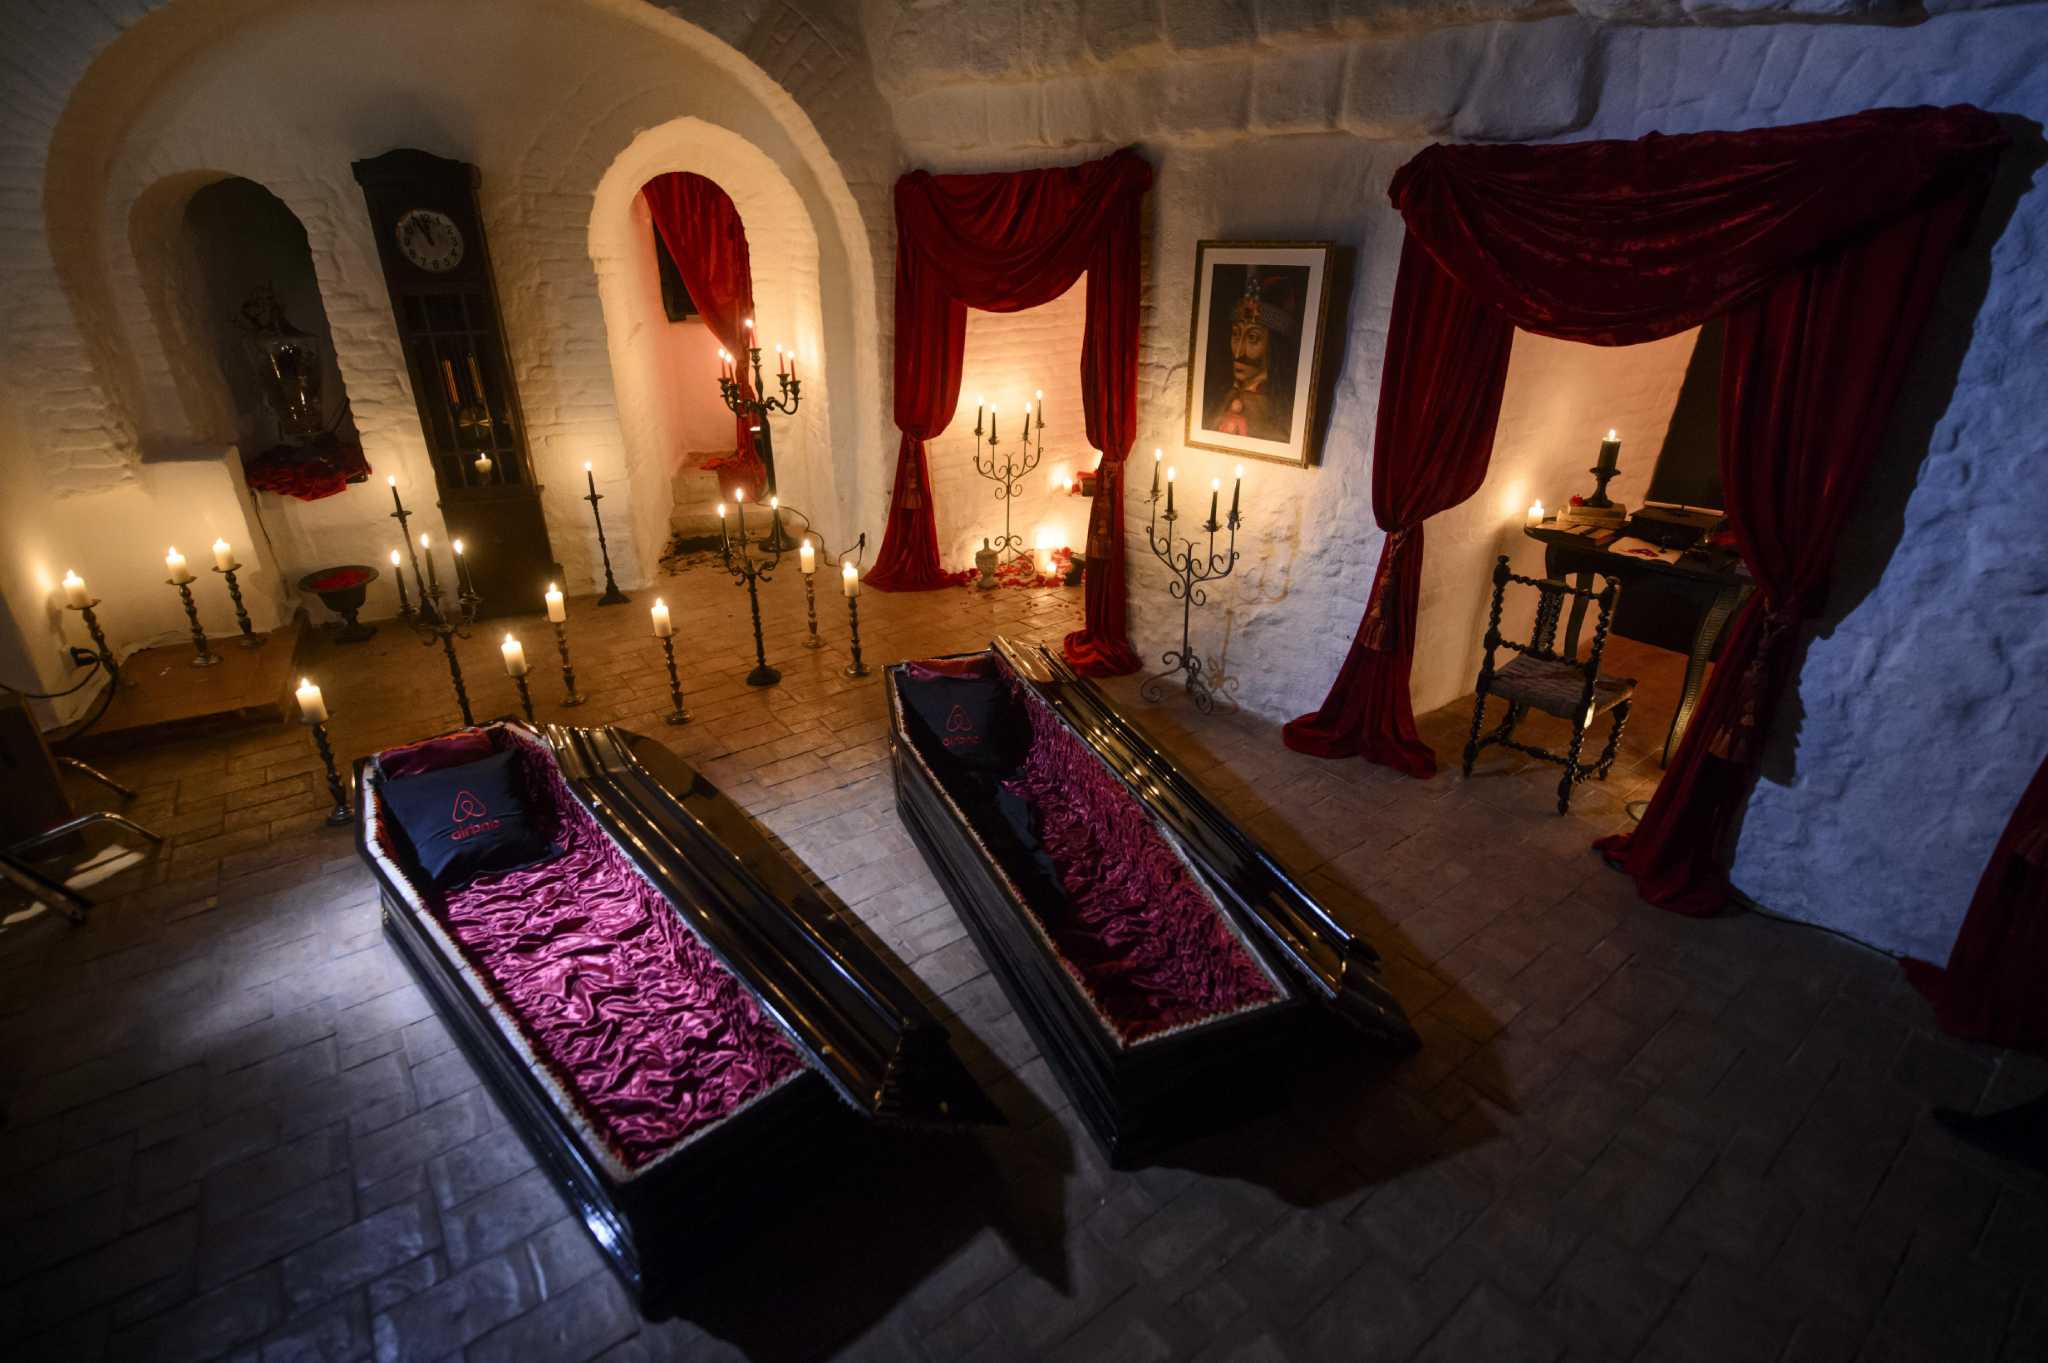 Halloween treat a night at Dracula’s castle in Transylvania